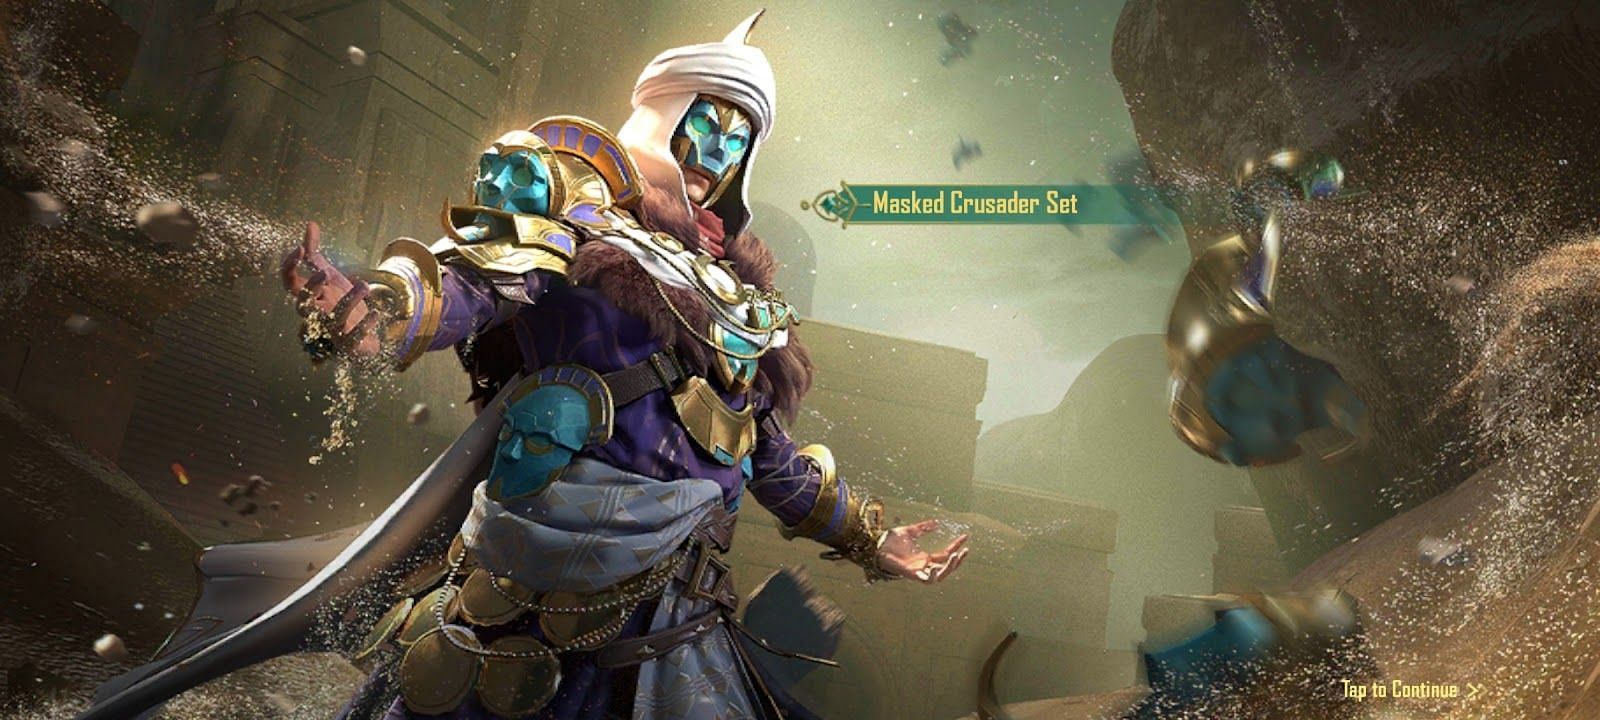 Masked Crusader Set is the major reward of the new RP (Image via Tencent)